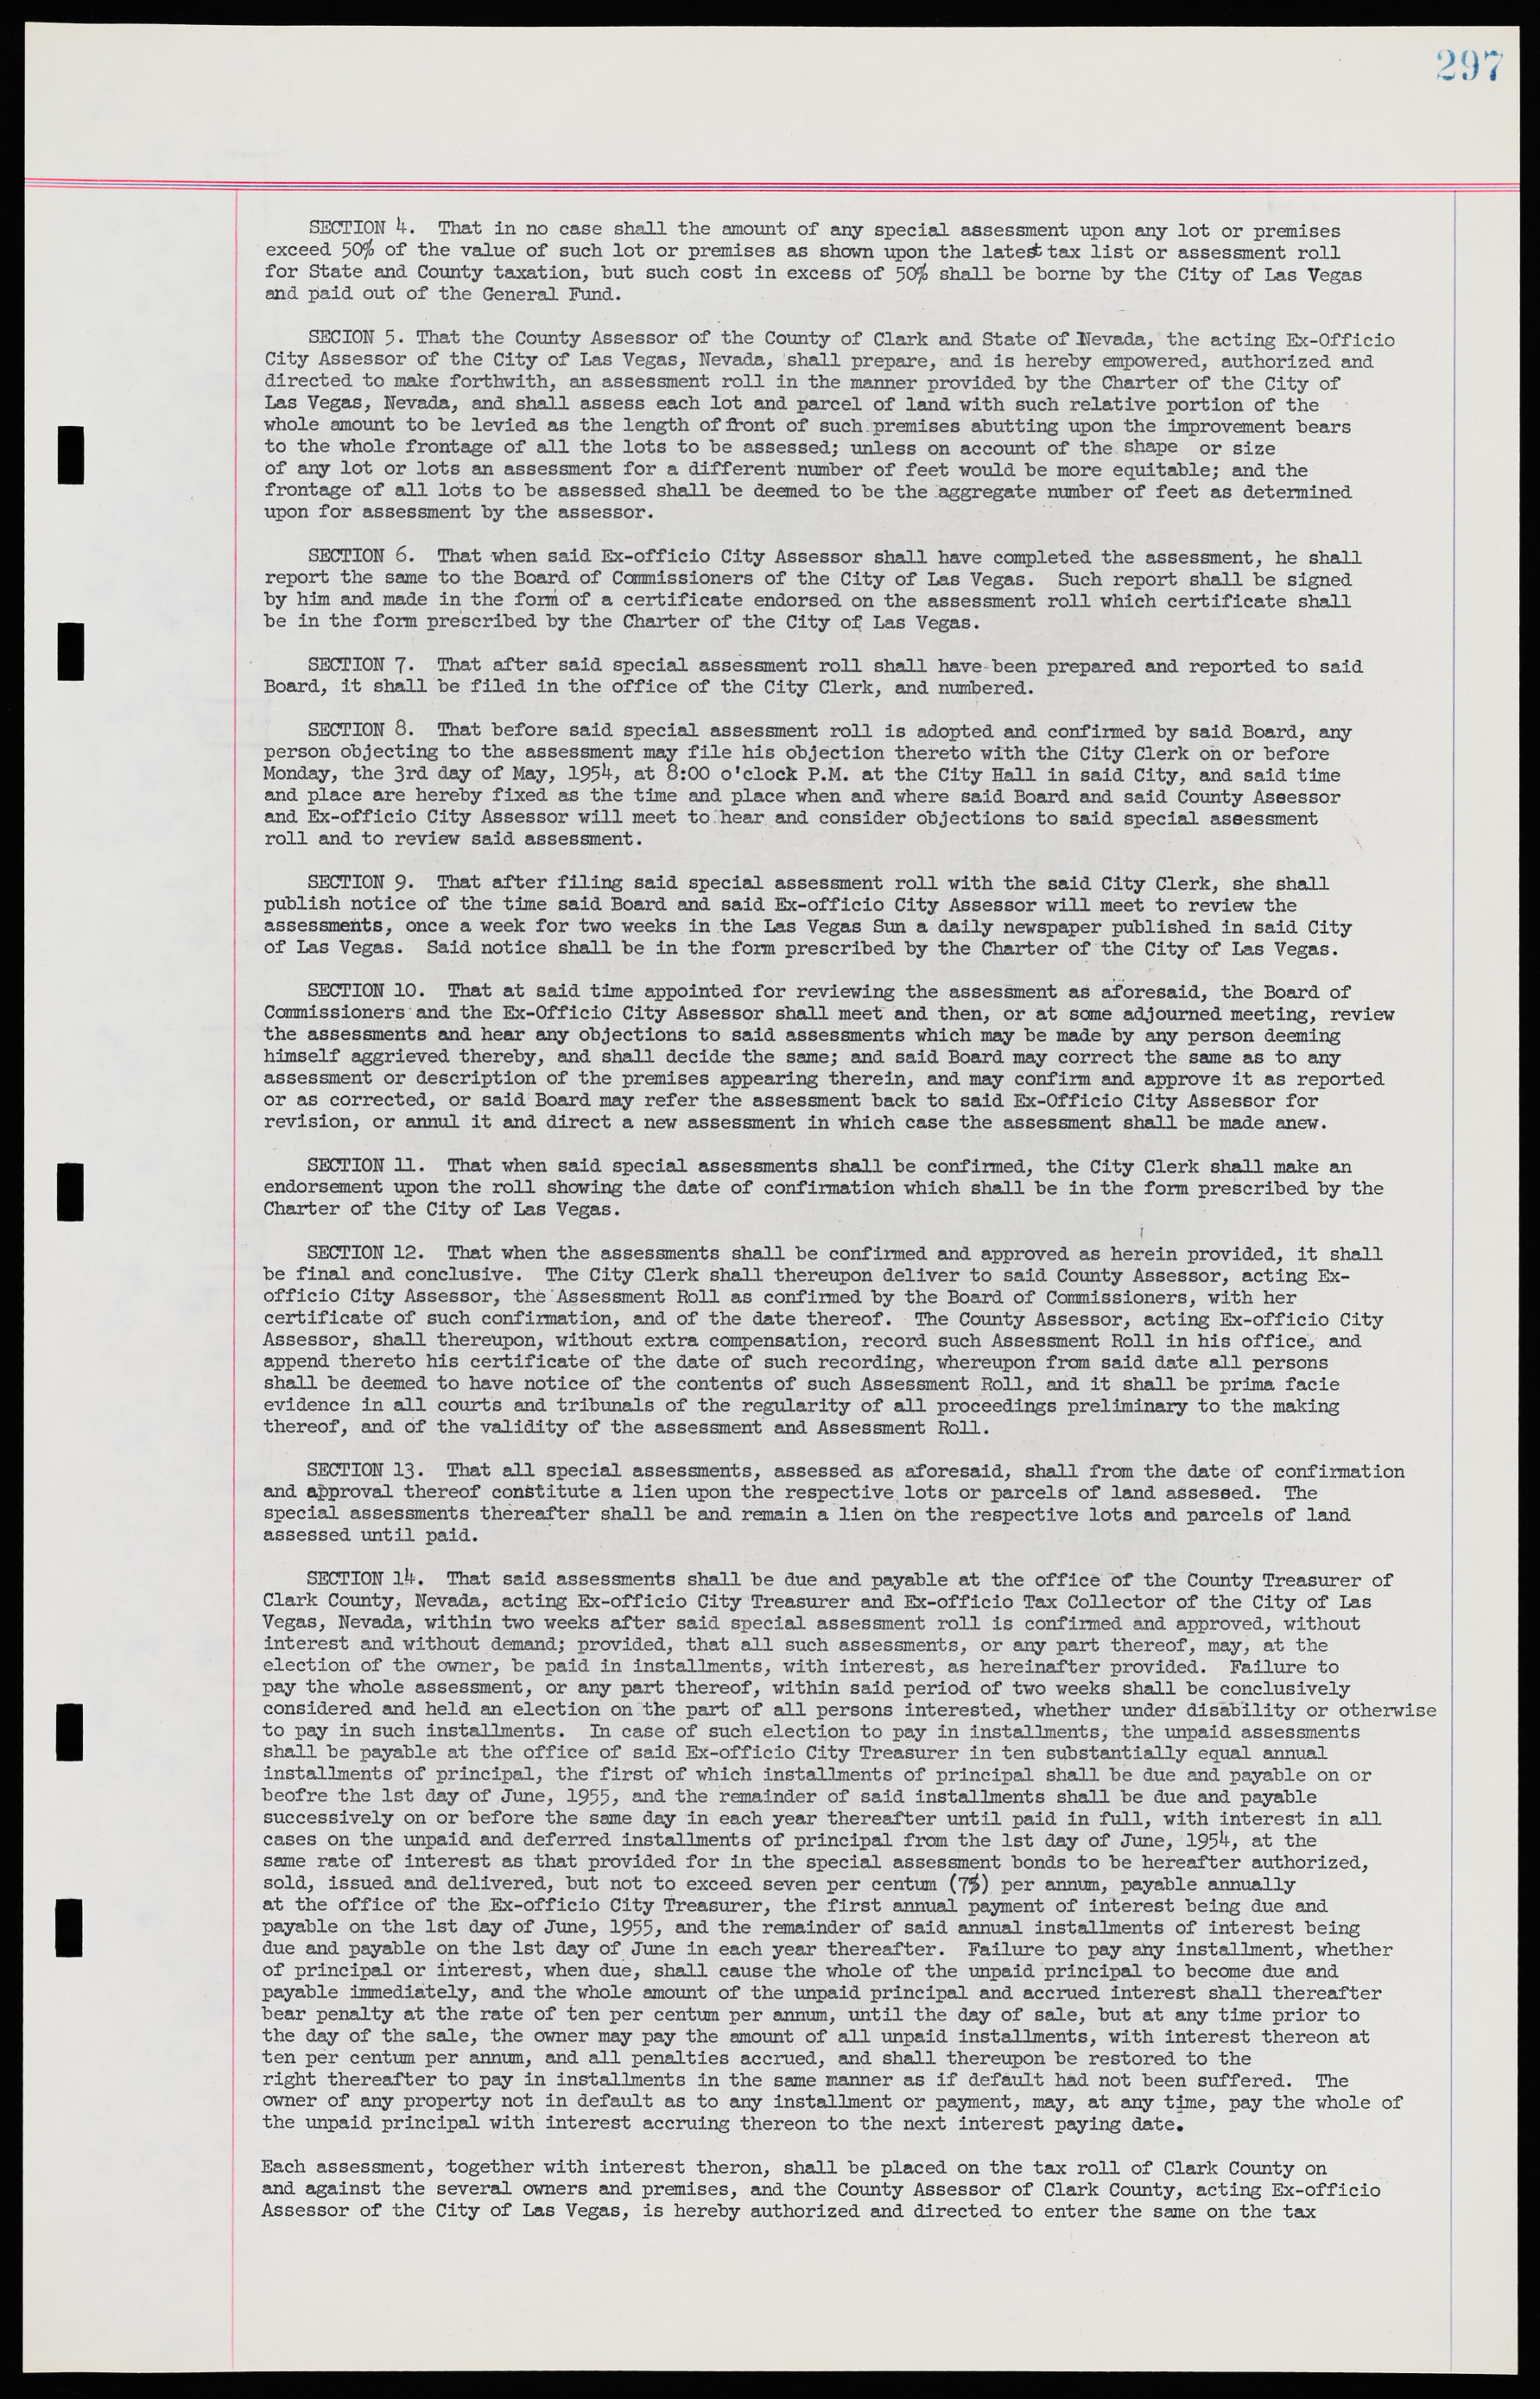 Las Vegas City Ordinances, November 13, 1950 to August 6, 1958, lvc000015-305